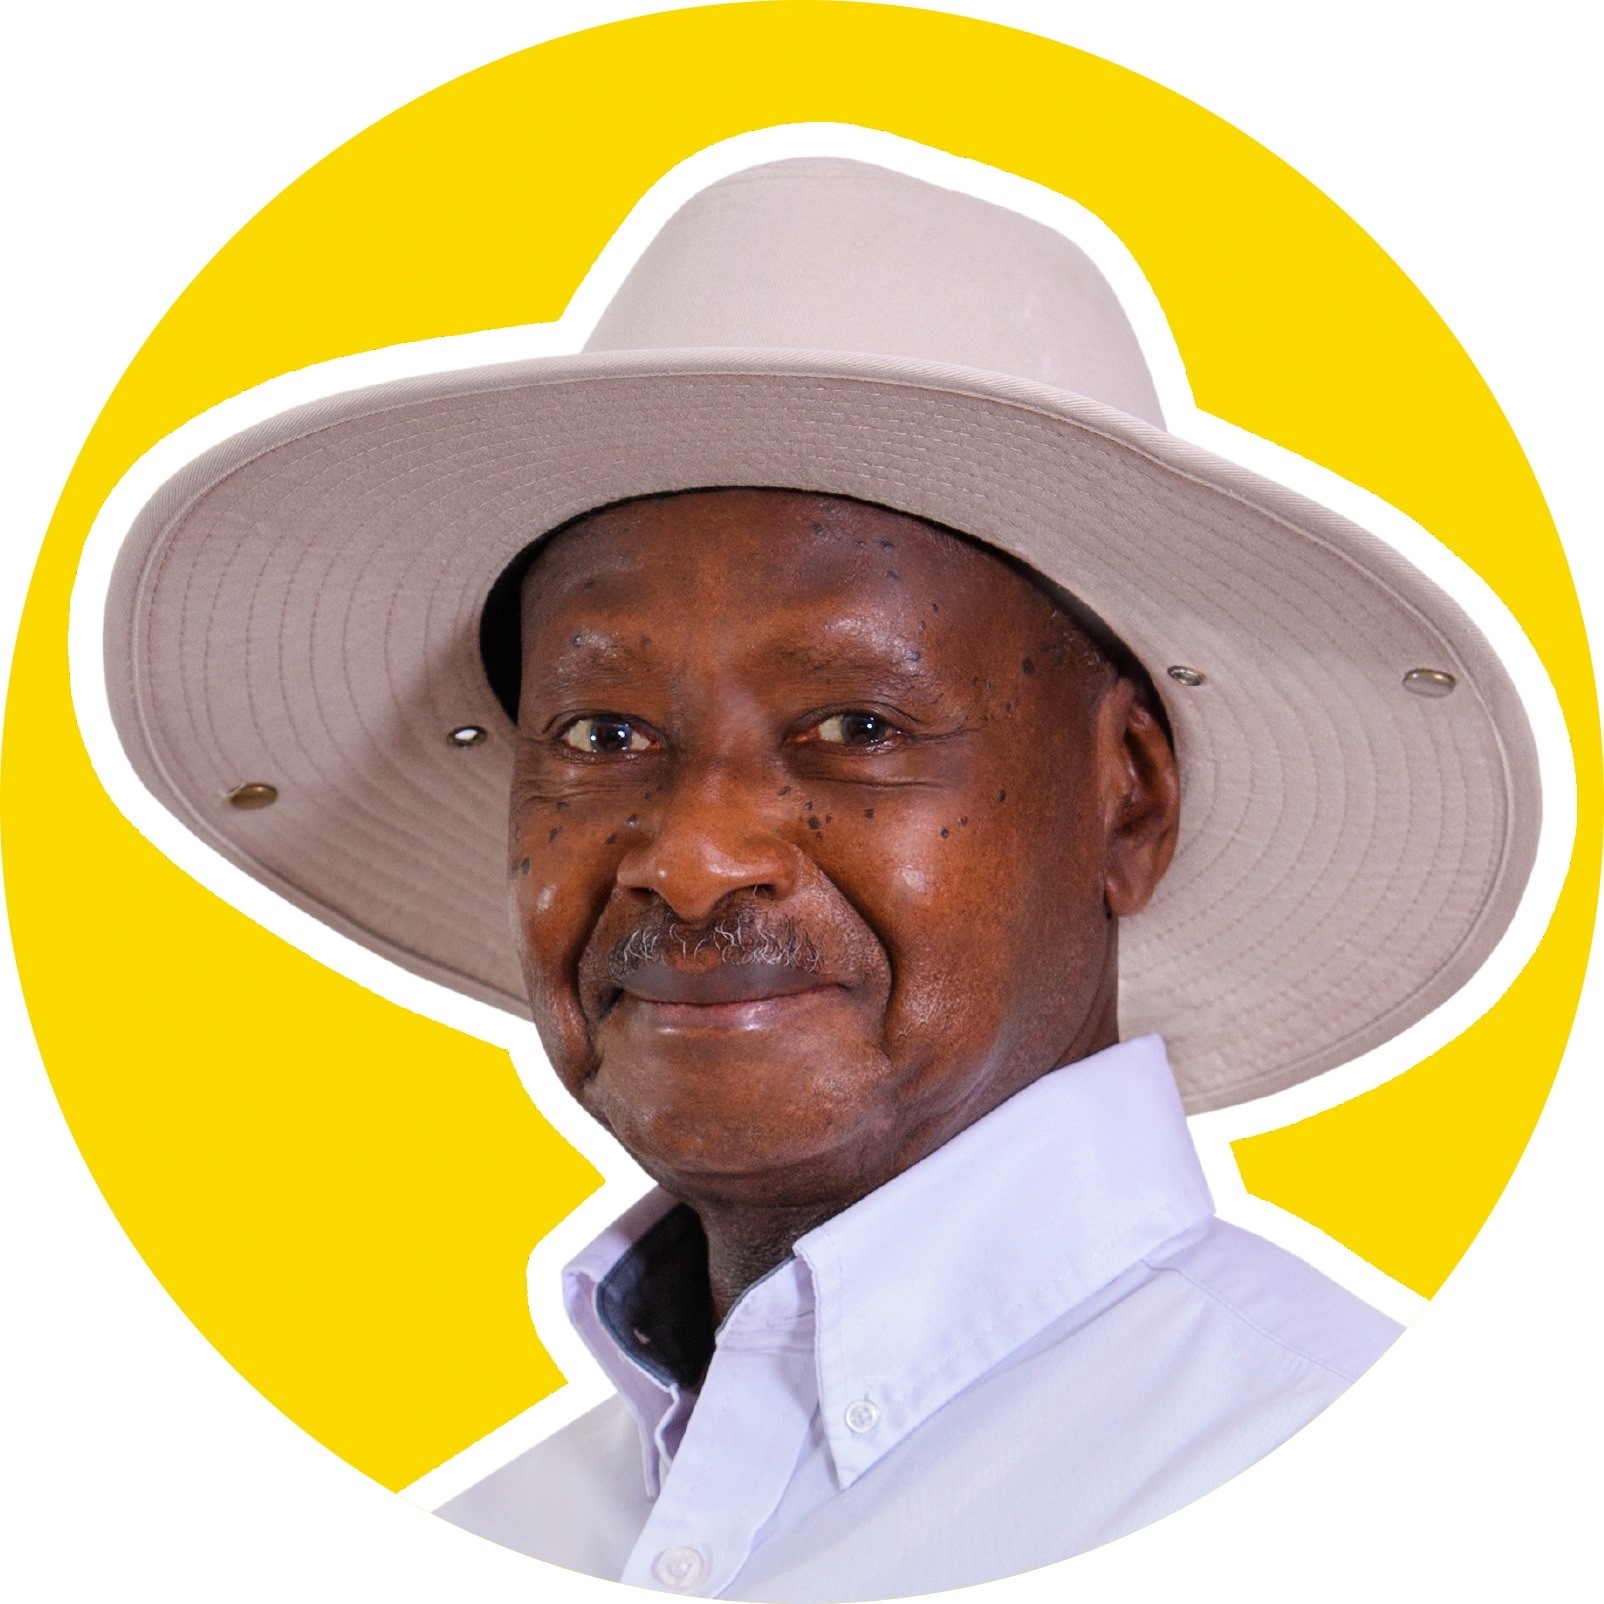 Kaguta Museveni